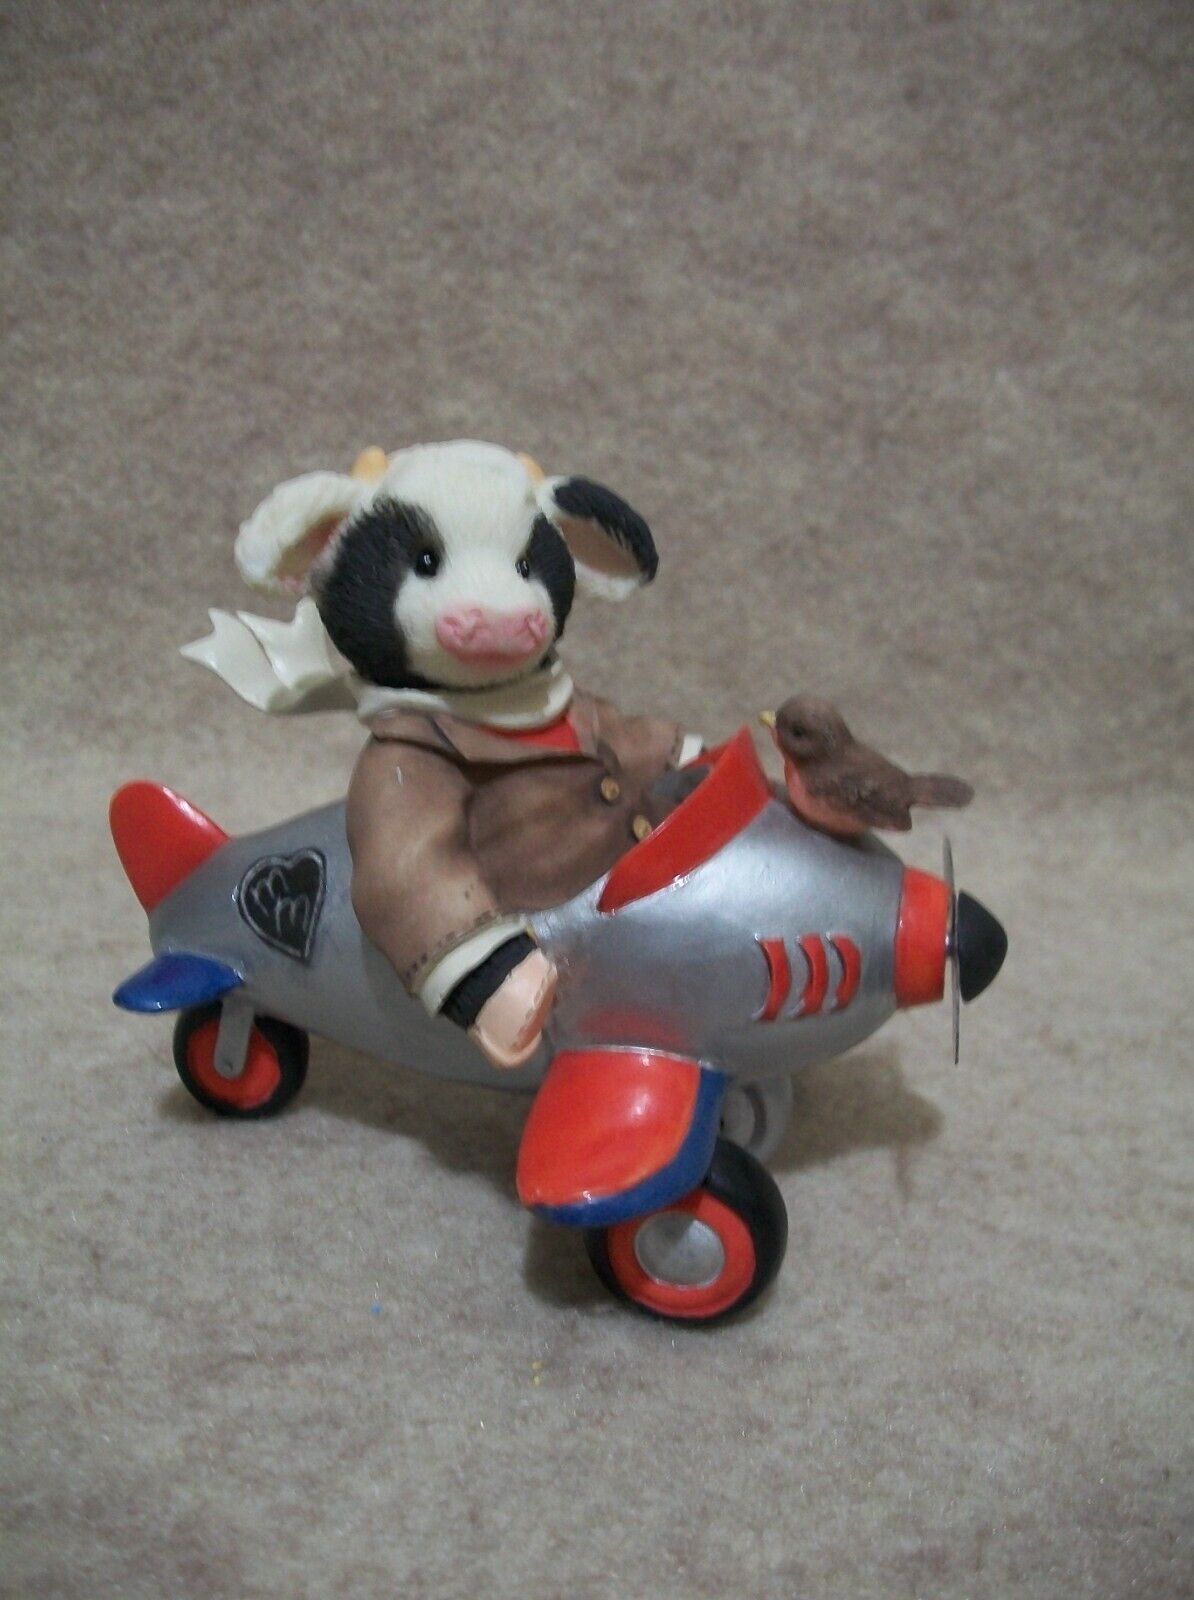 With You My Spirits Soar - Plane - Mary Moo Moo Cow Figurine